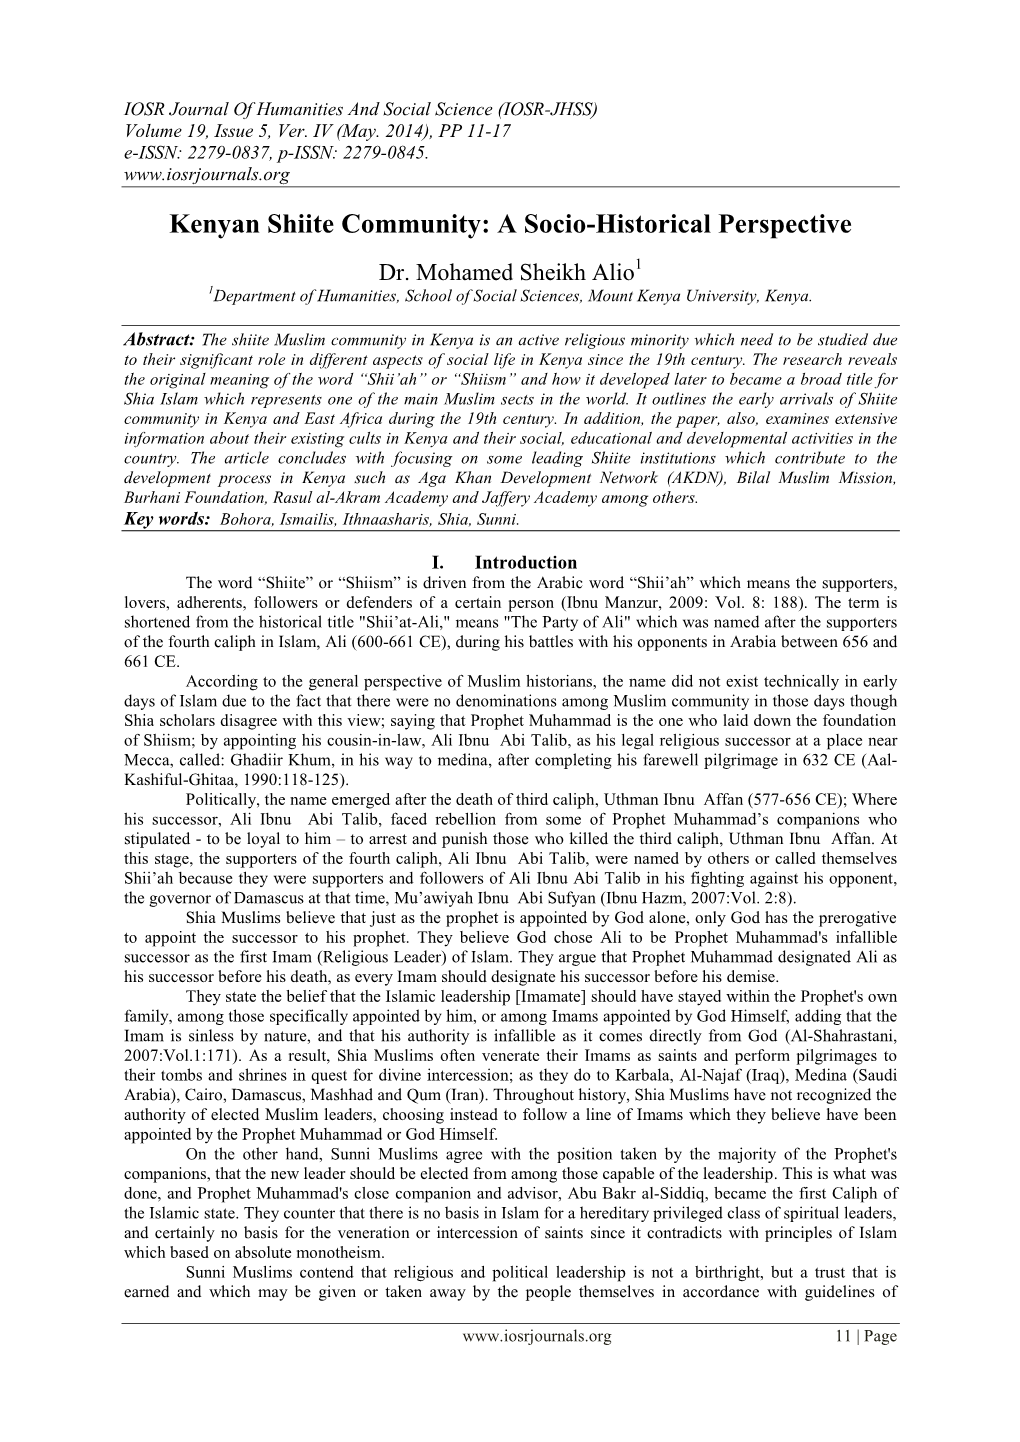 Kenyan Shiite Community: a Socio-Historical Perspective